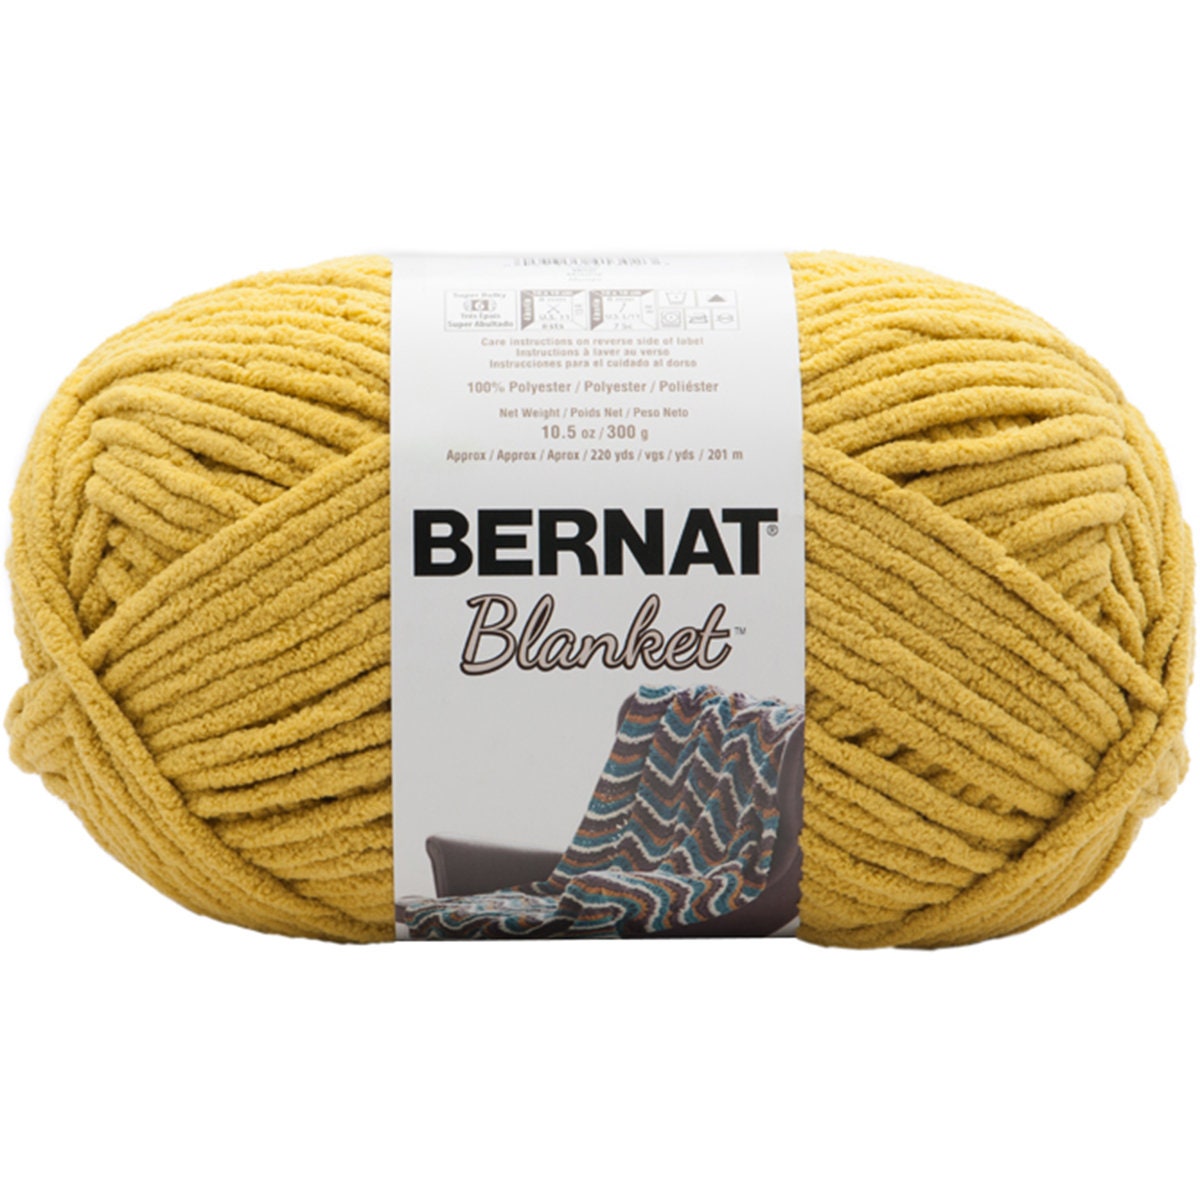 Bernat Blanket Gathering Moss Yarn - 2 Pack of 300g/10.5oz - Polyester - 6  Super Bulky - 220 Yards - Knitting/Crochet 